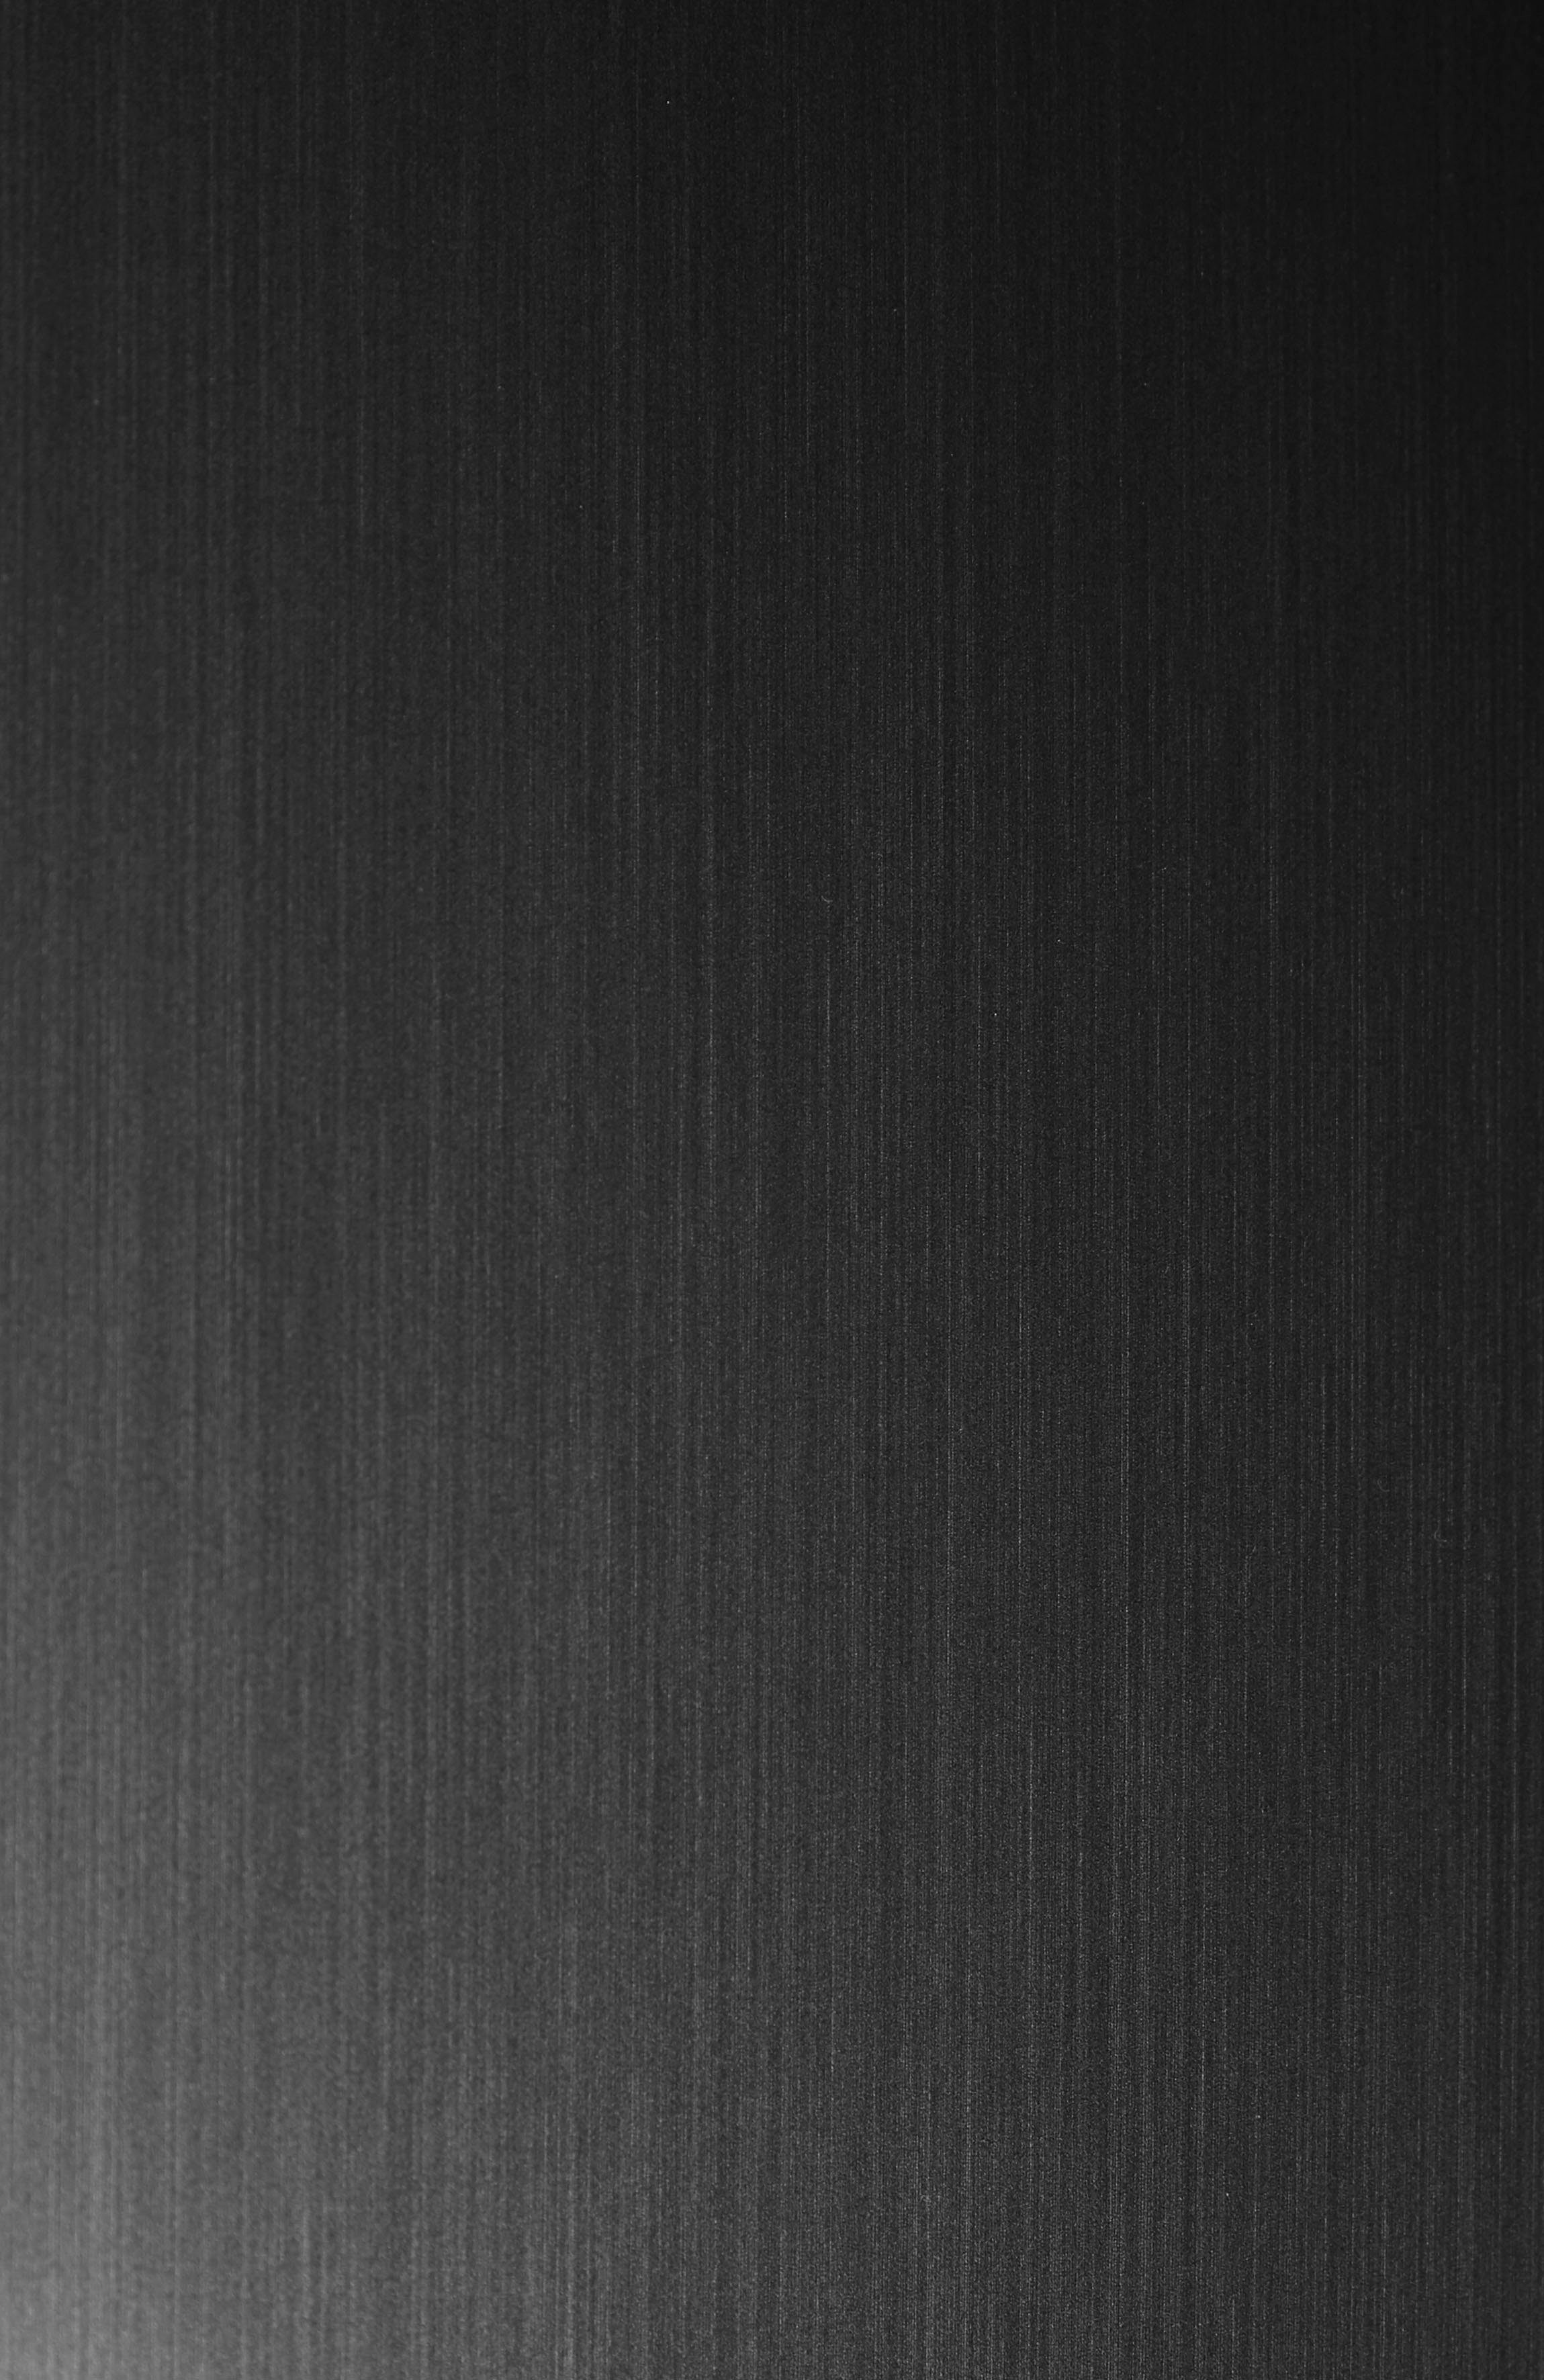 breit hoch, black cm steel Side-by-Side 178 premium Samsung RS6HA8891B1, cm 91,2